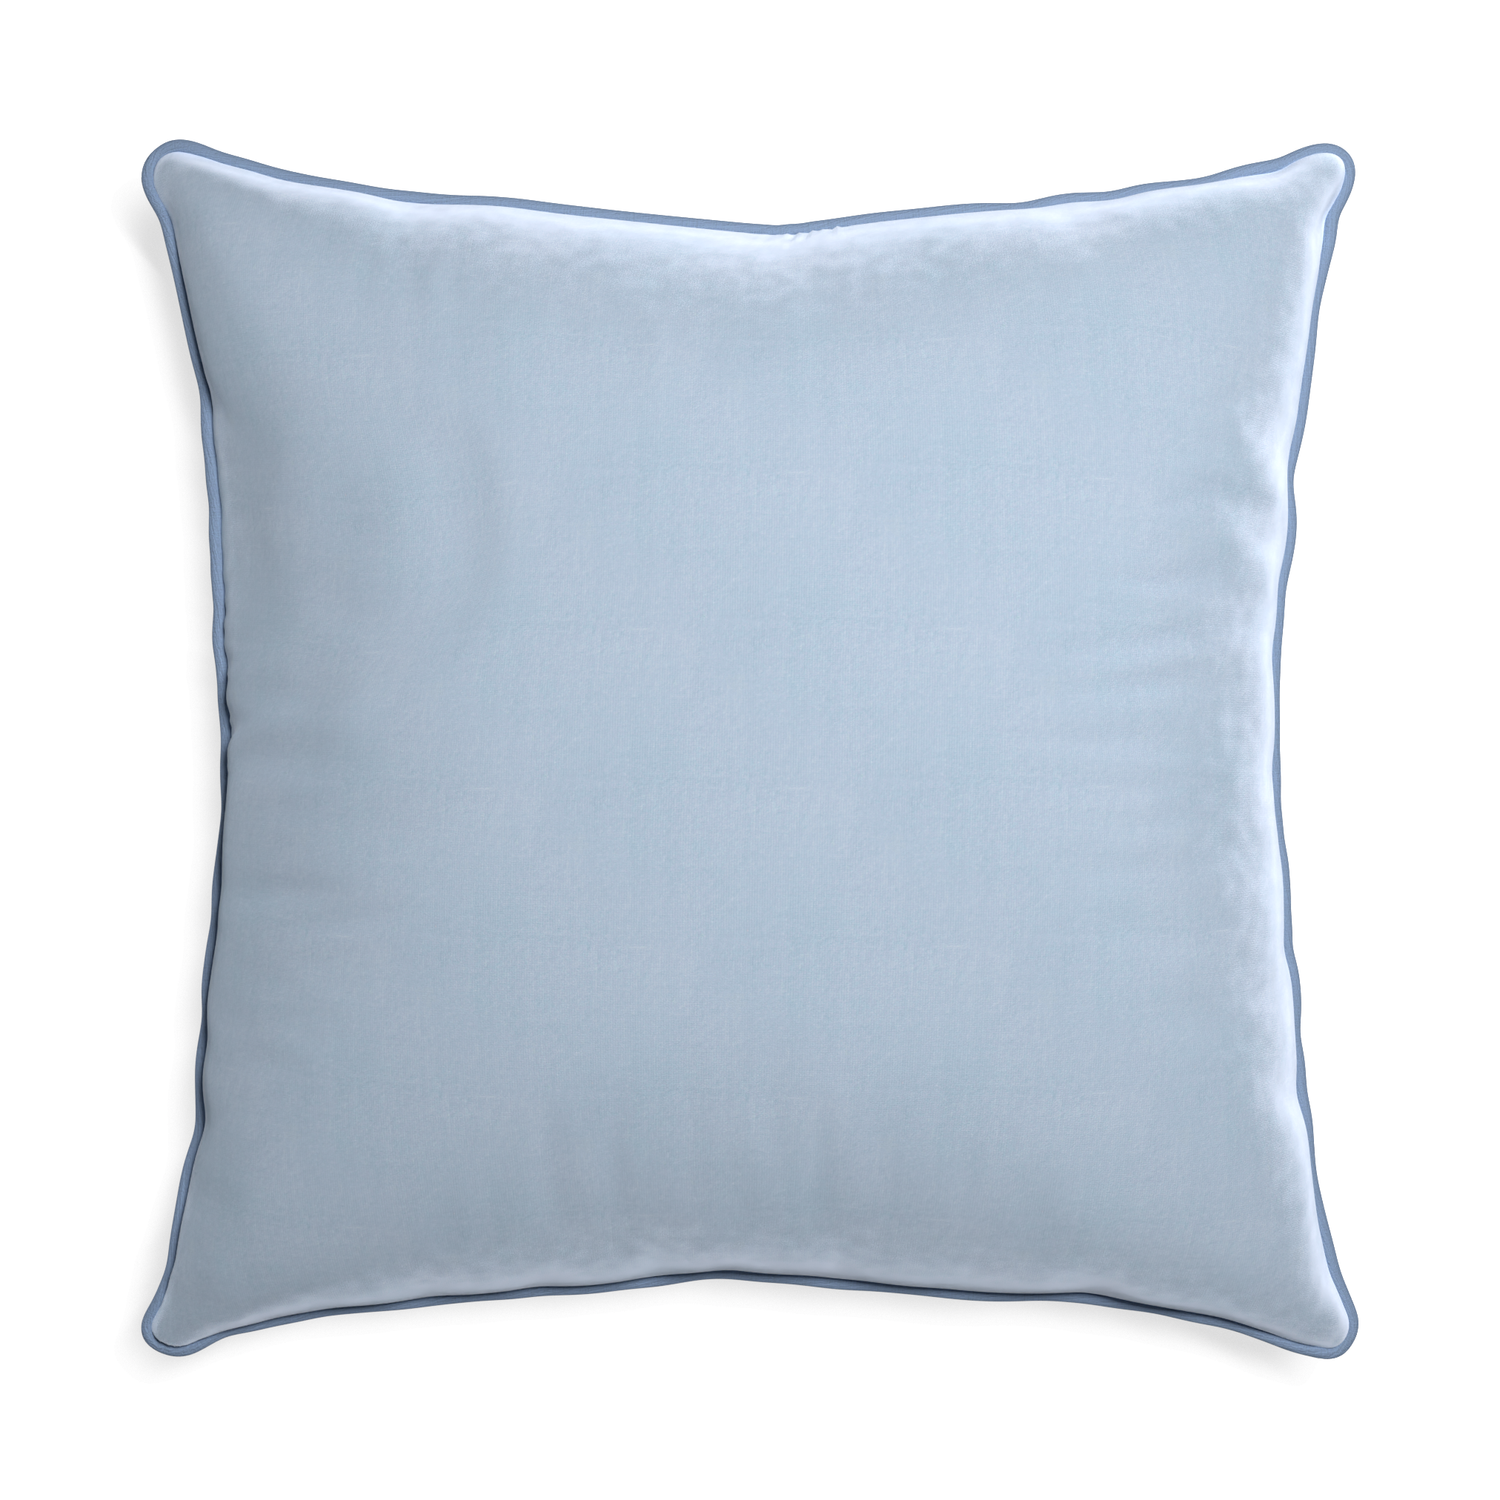 square light blue velvet pillow with sky blue piping